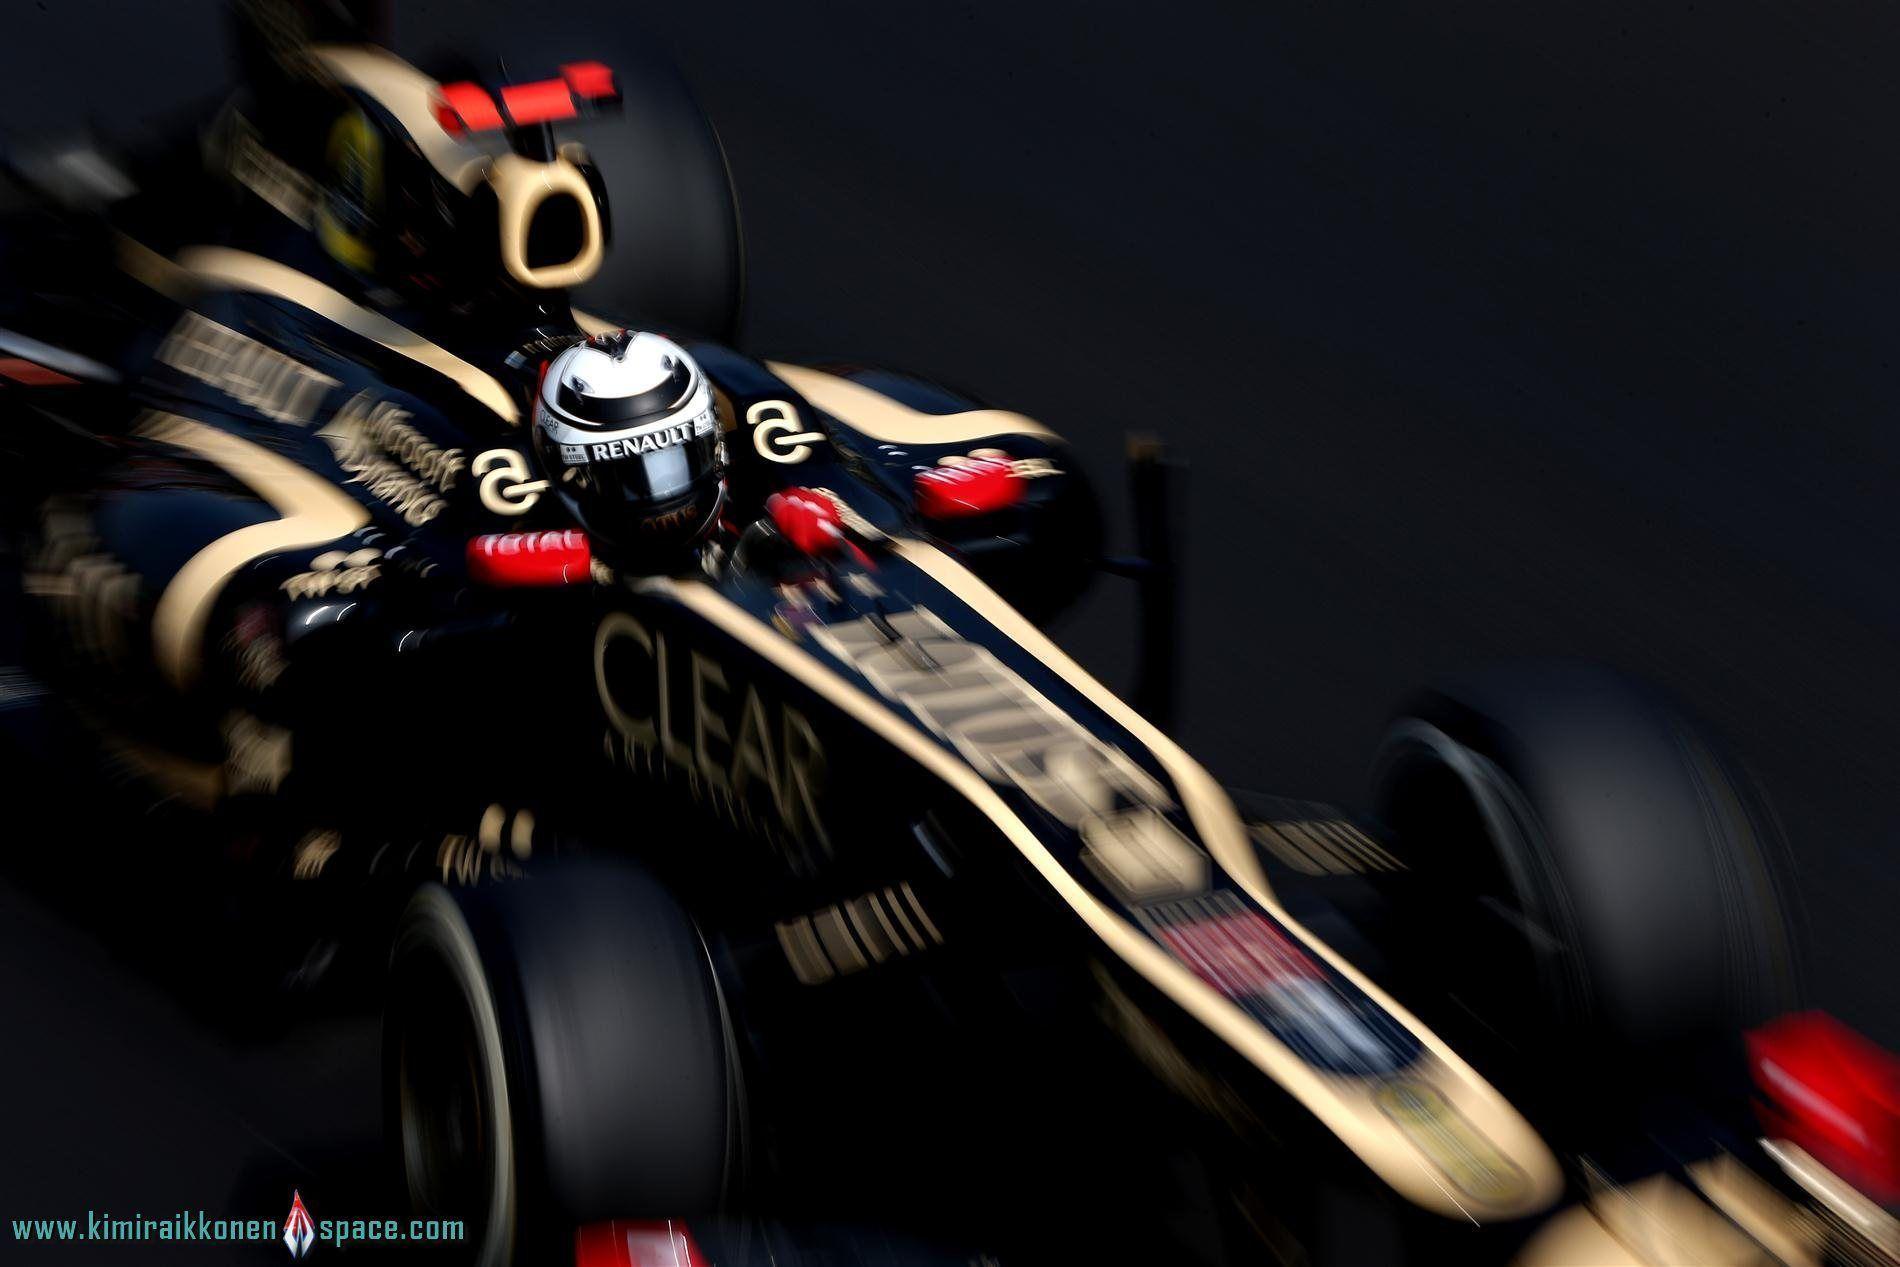 Kimi Raikkonen Lotus Wallpaper Image & Picture